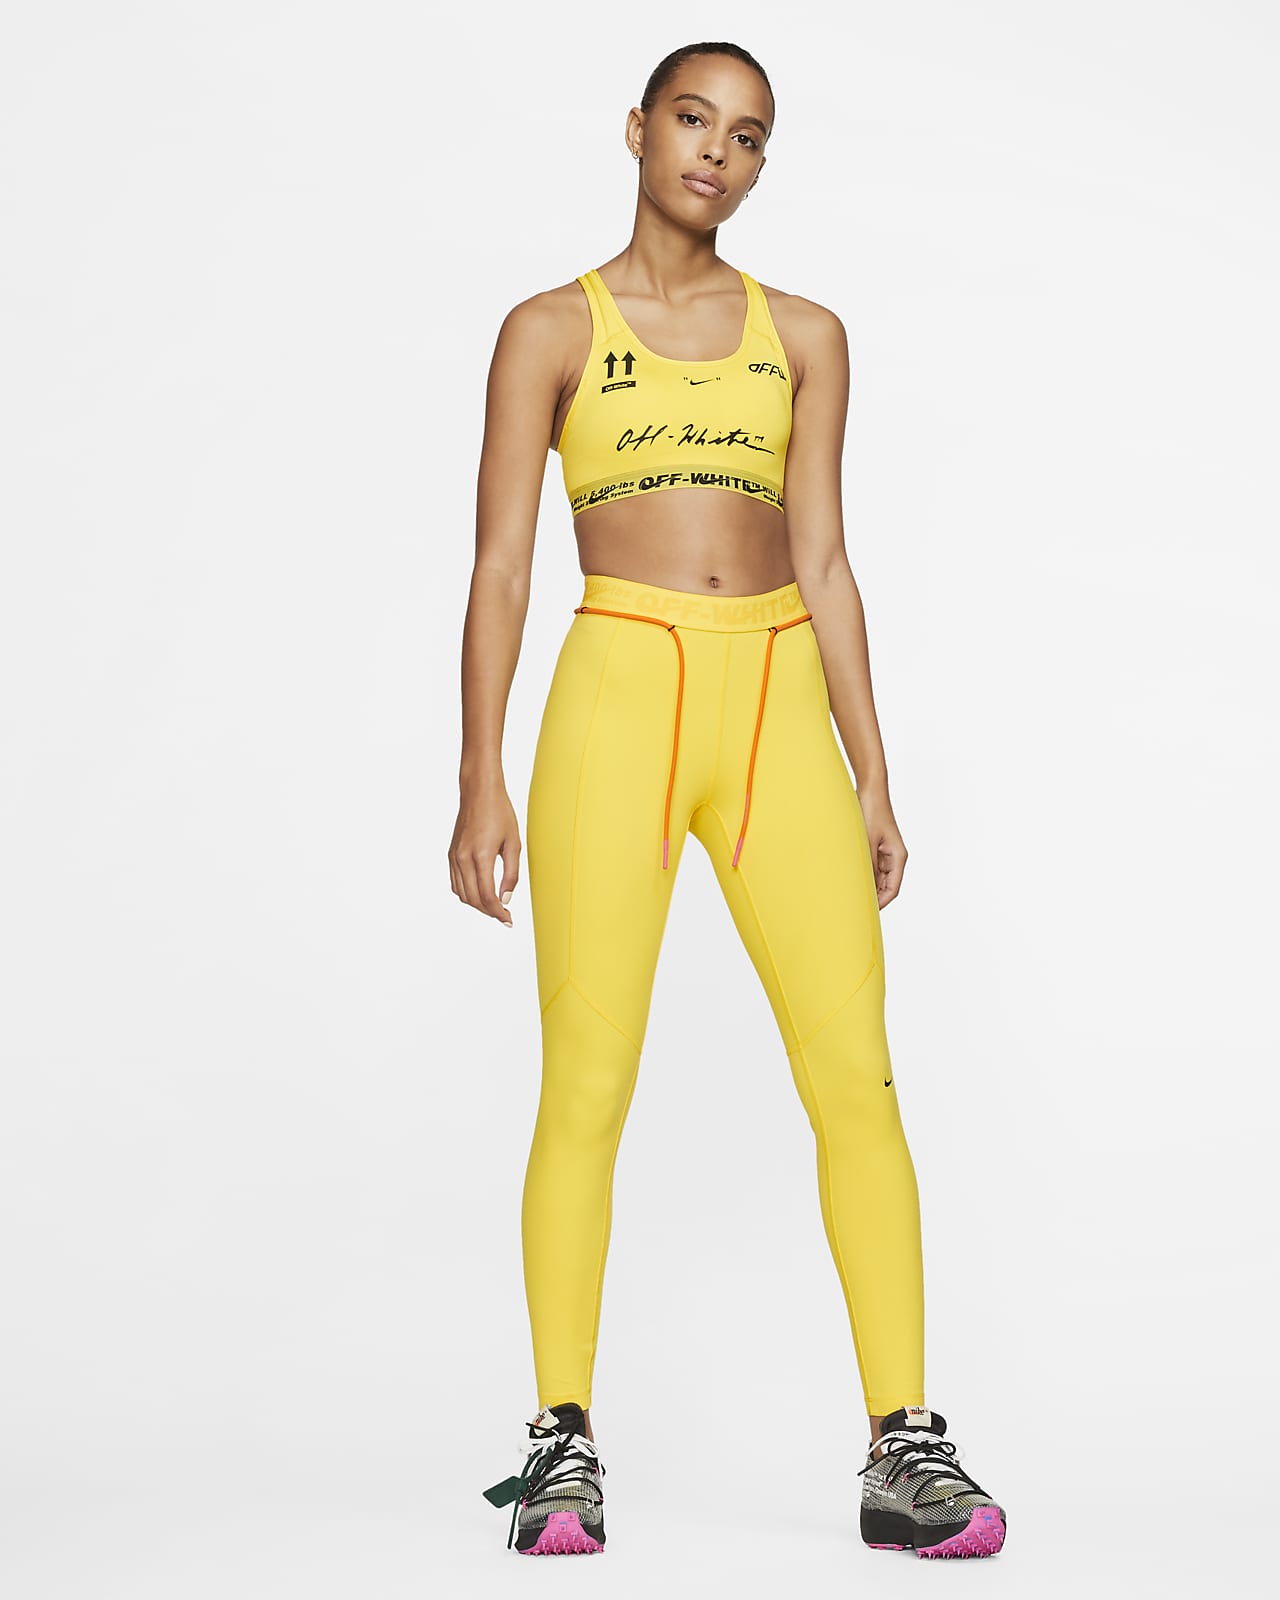 Women's Running Tights. Nike JP